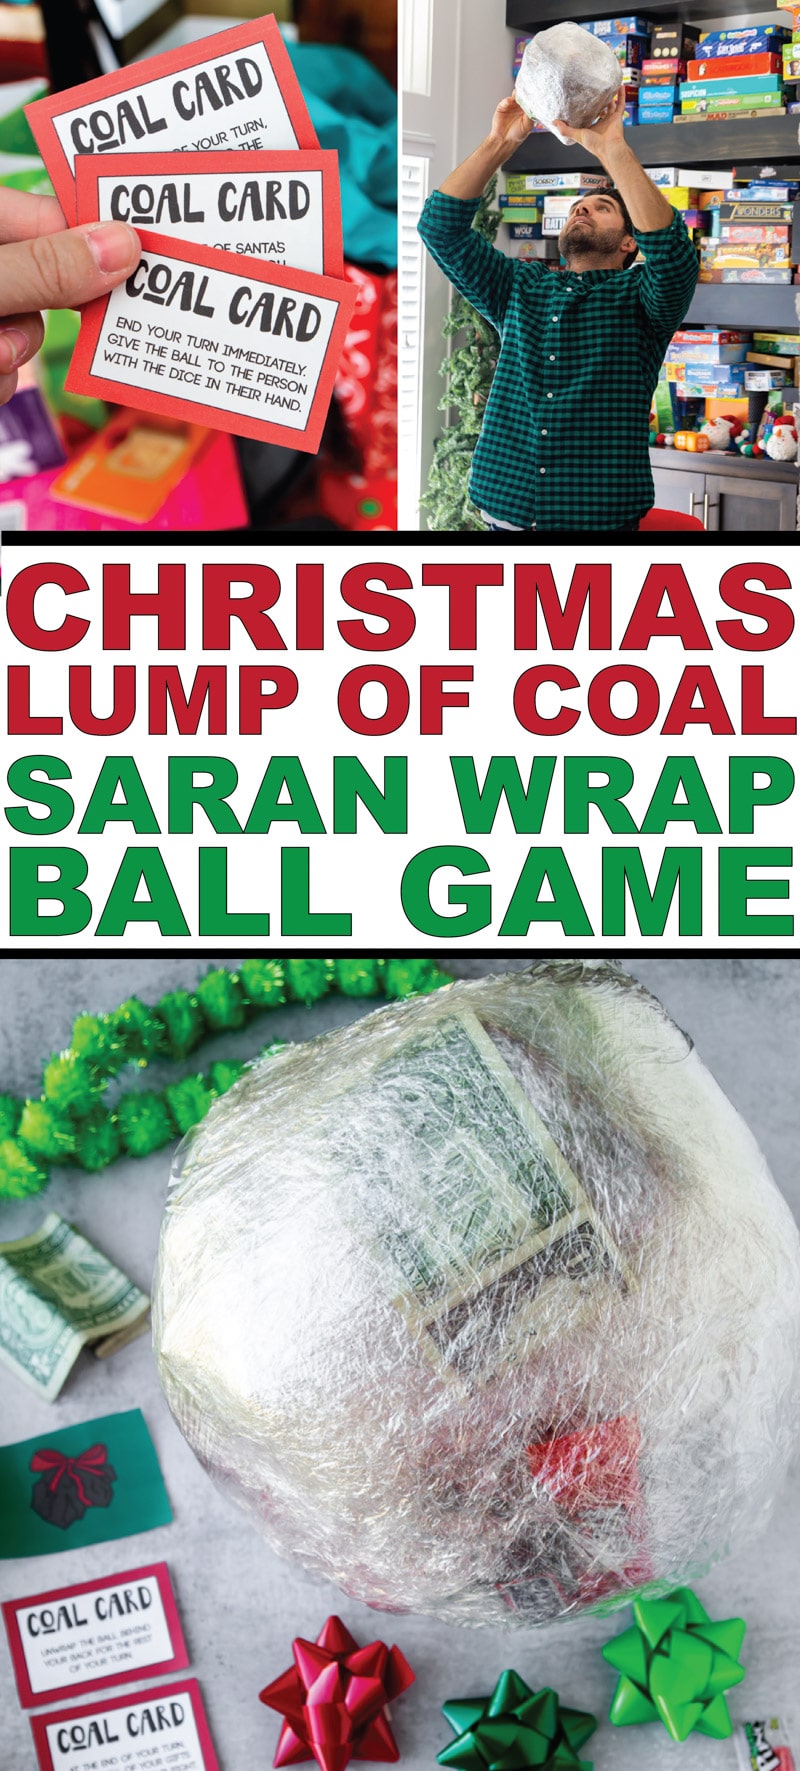 Hilarious Saran Wrap Ball Game (with Video!) - Play Party Plan